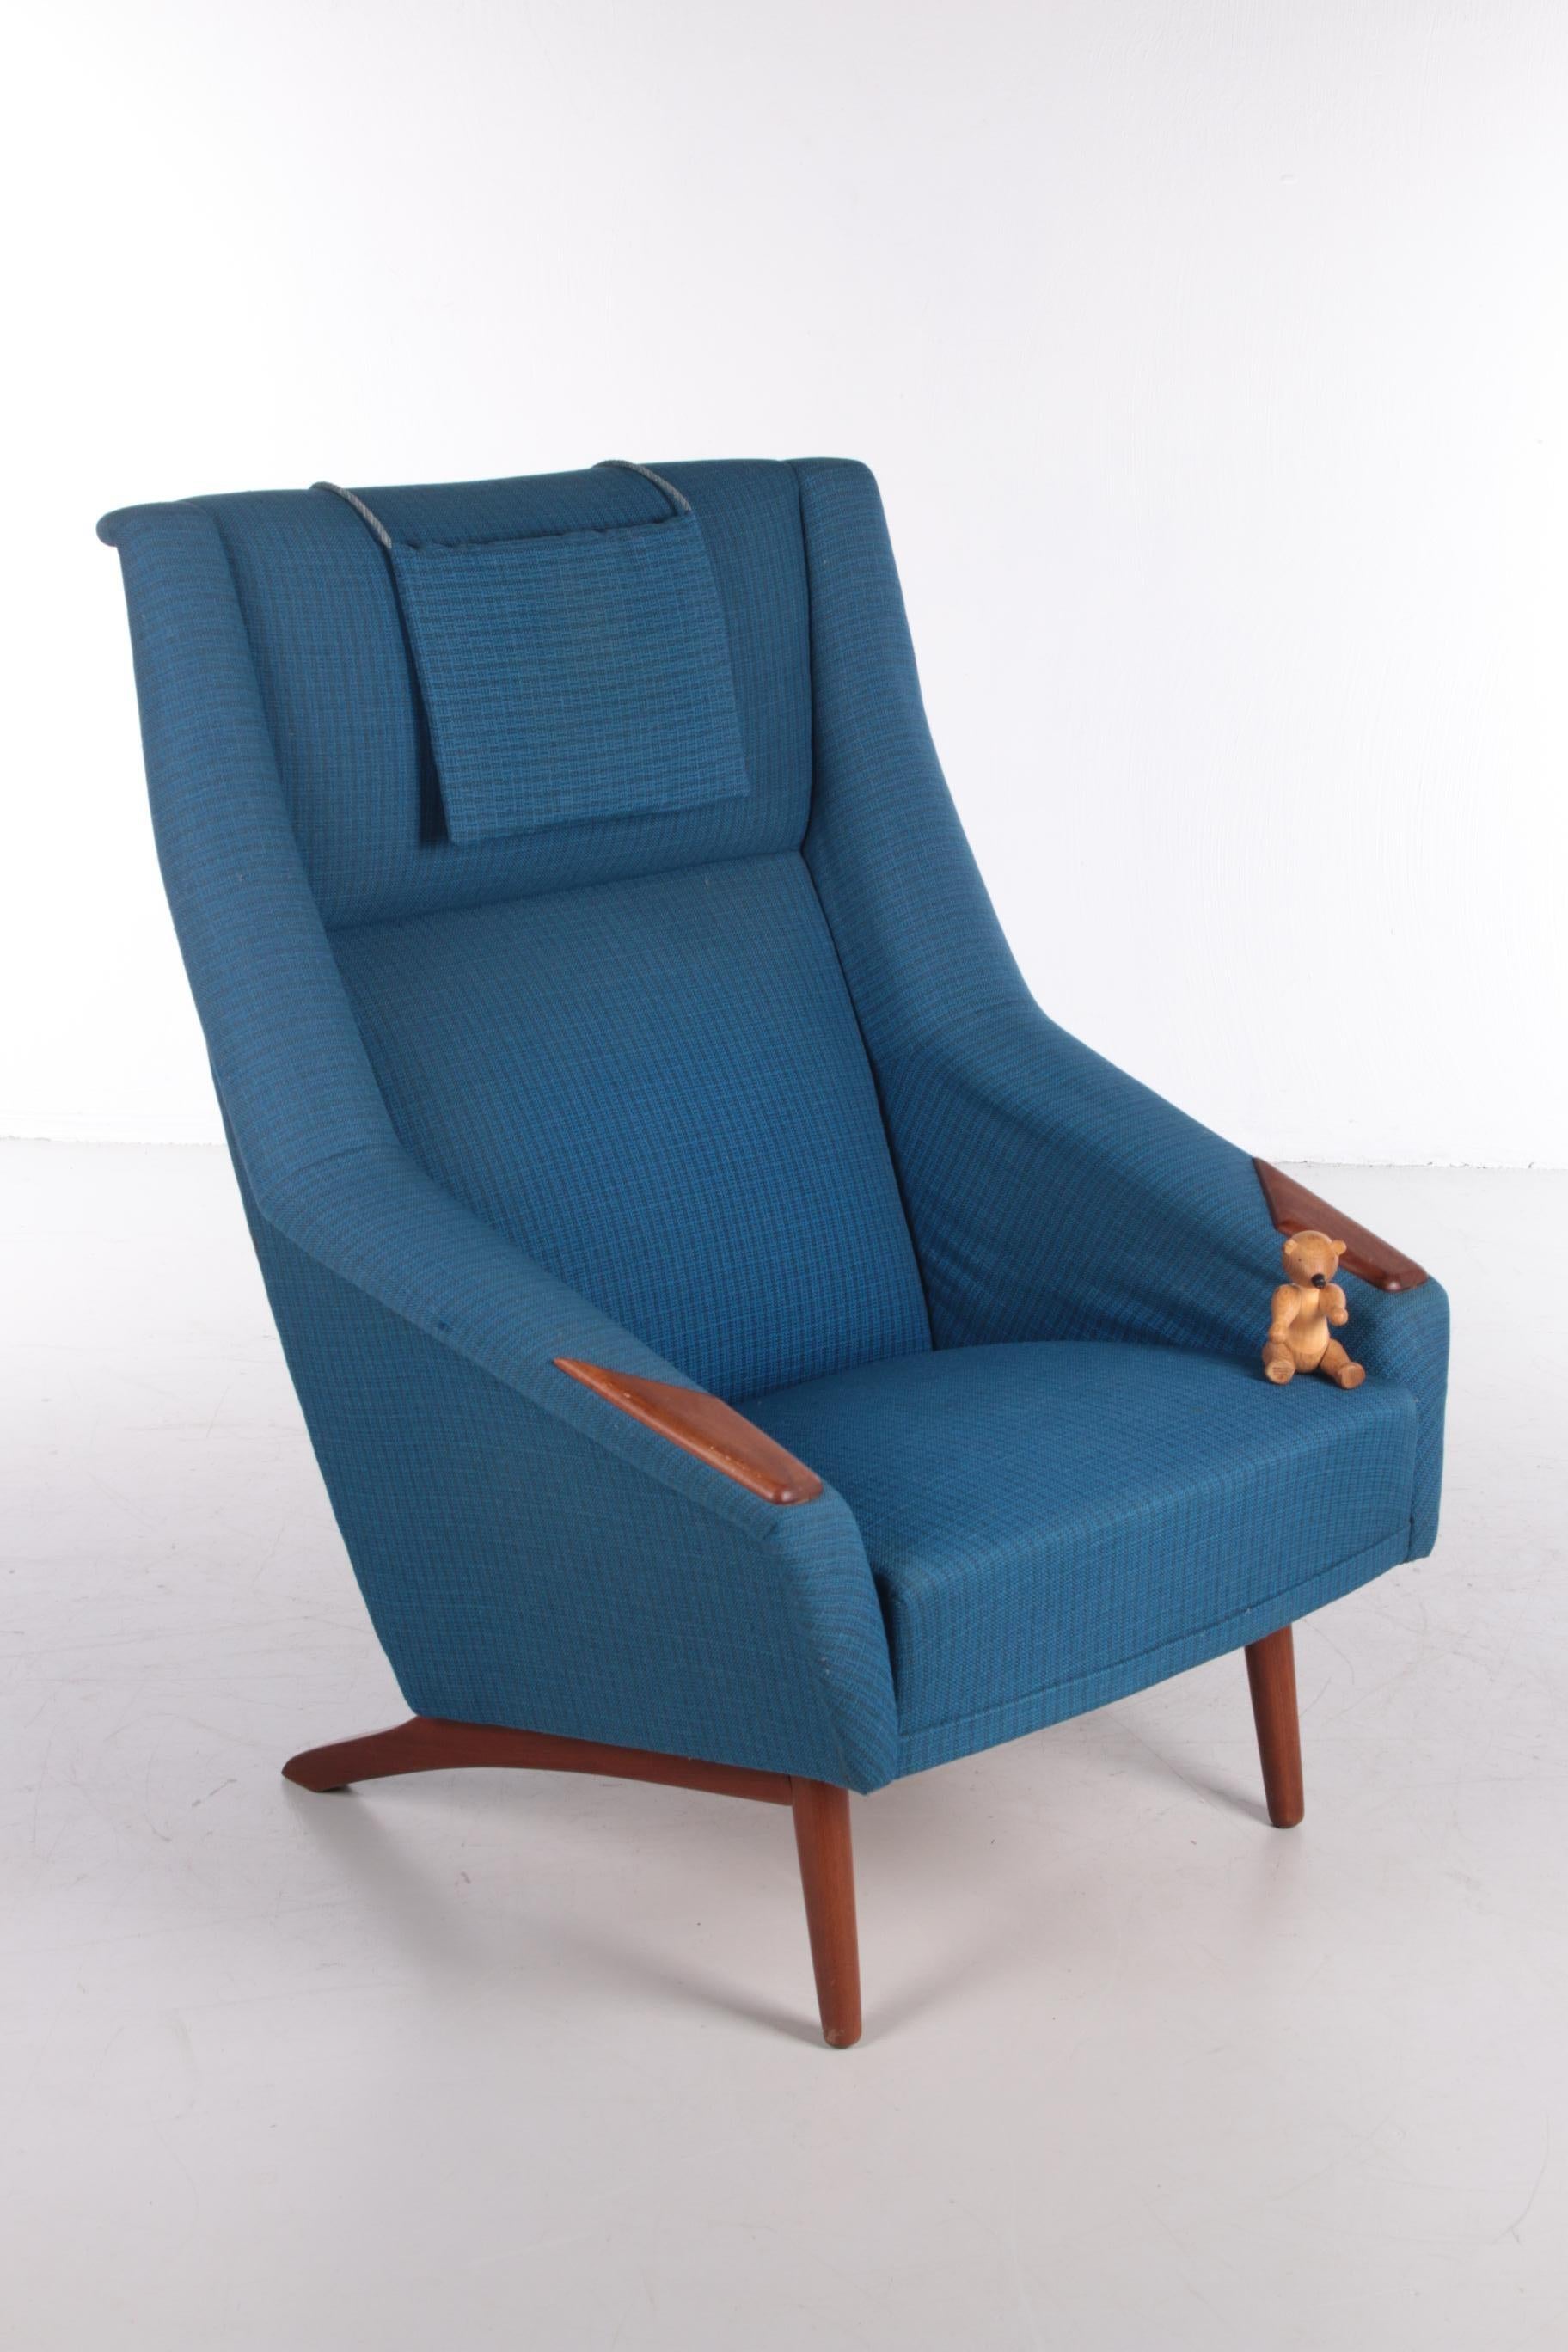 Relaxing Chair Folke Ohlsson Made by Fritz Hansen 6